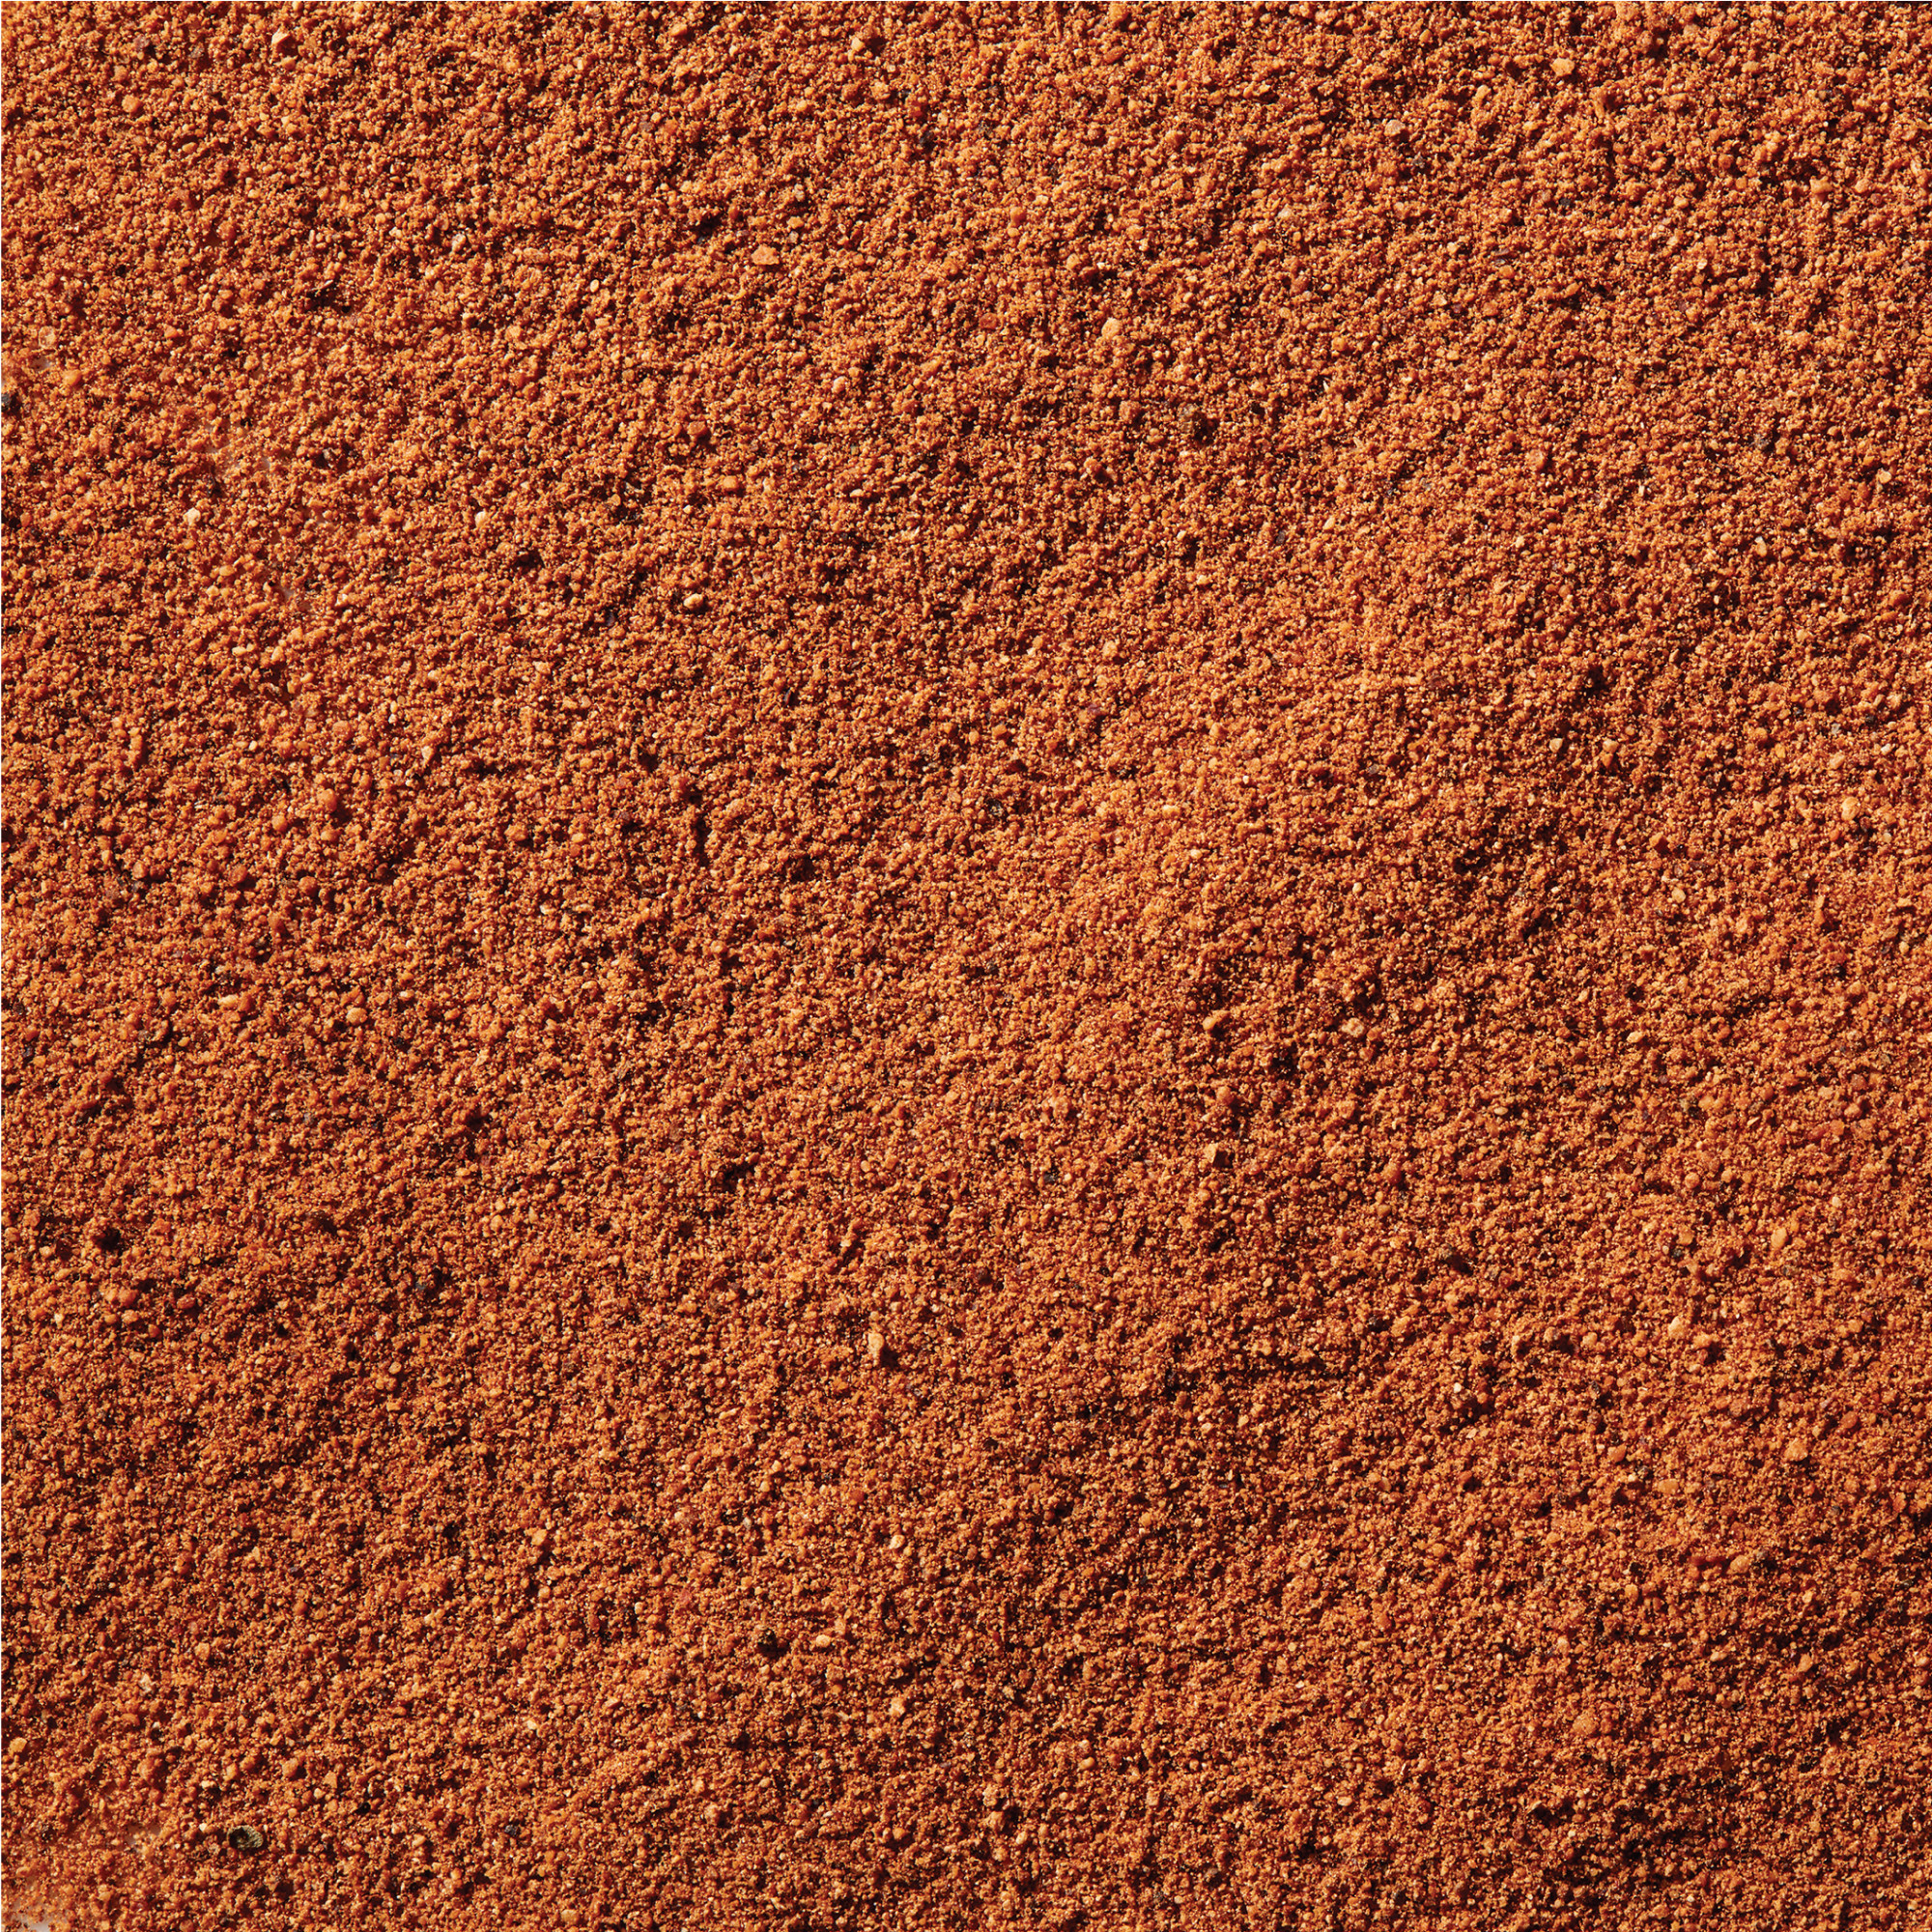 McCormick Nutmeg - Ground, 1.1 oz Mixed Spices & Seasonings - image 4 of 12